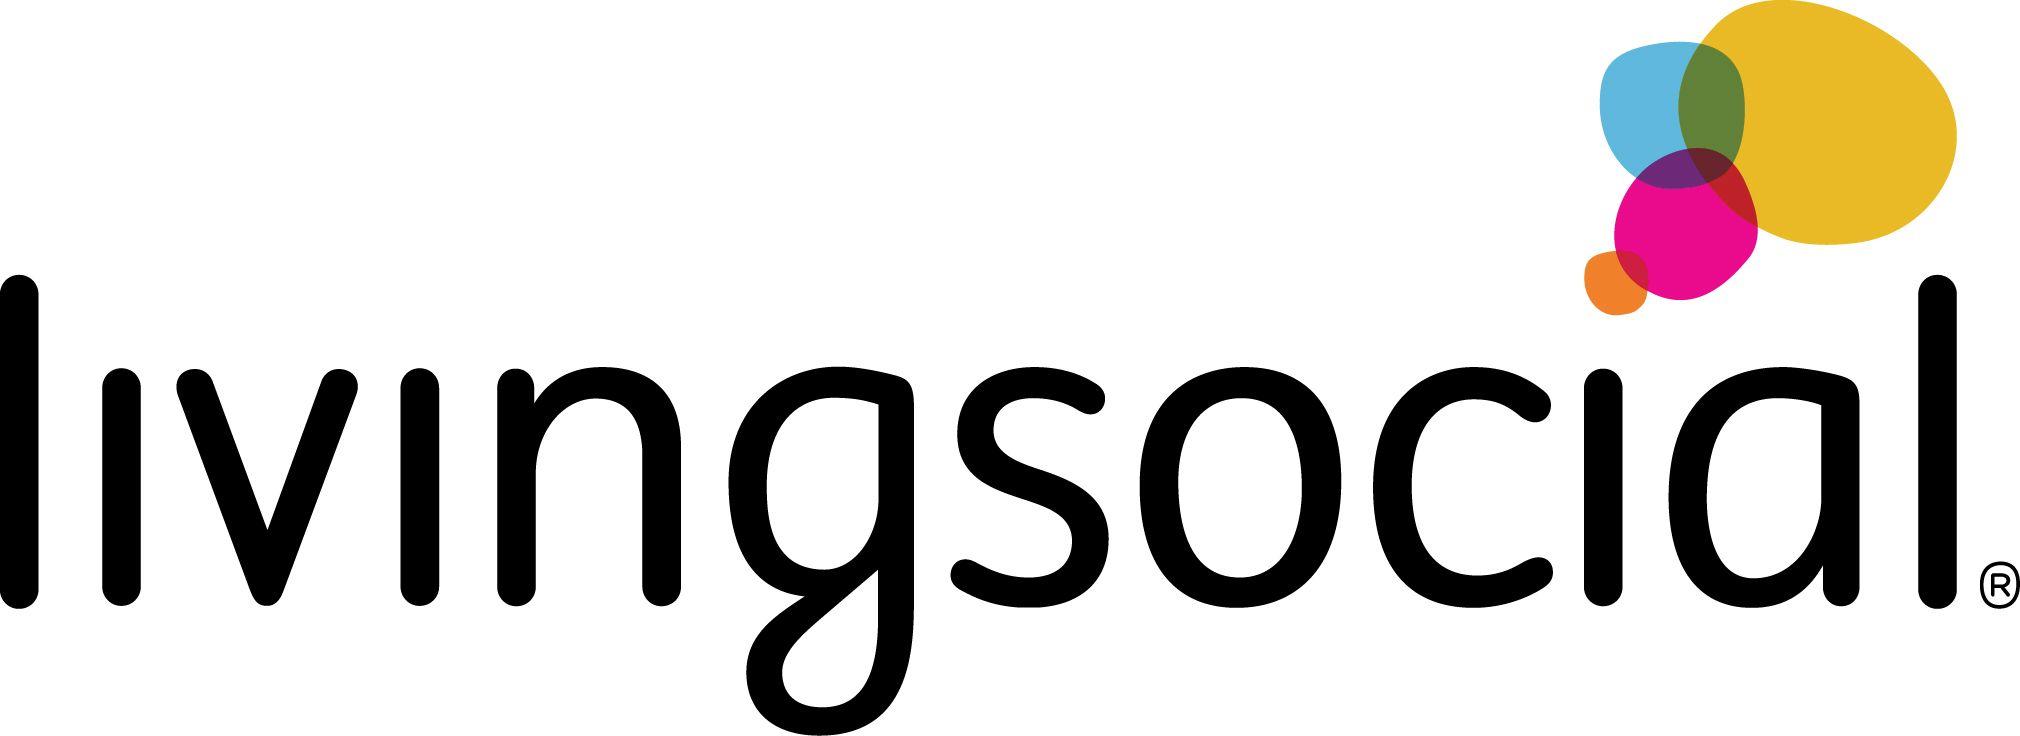 LivingSocial Logo - LivingSocial Logo